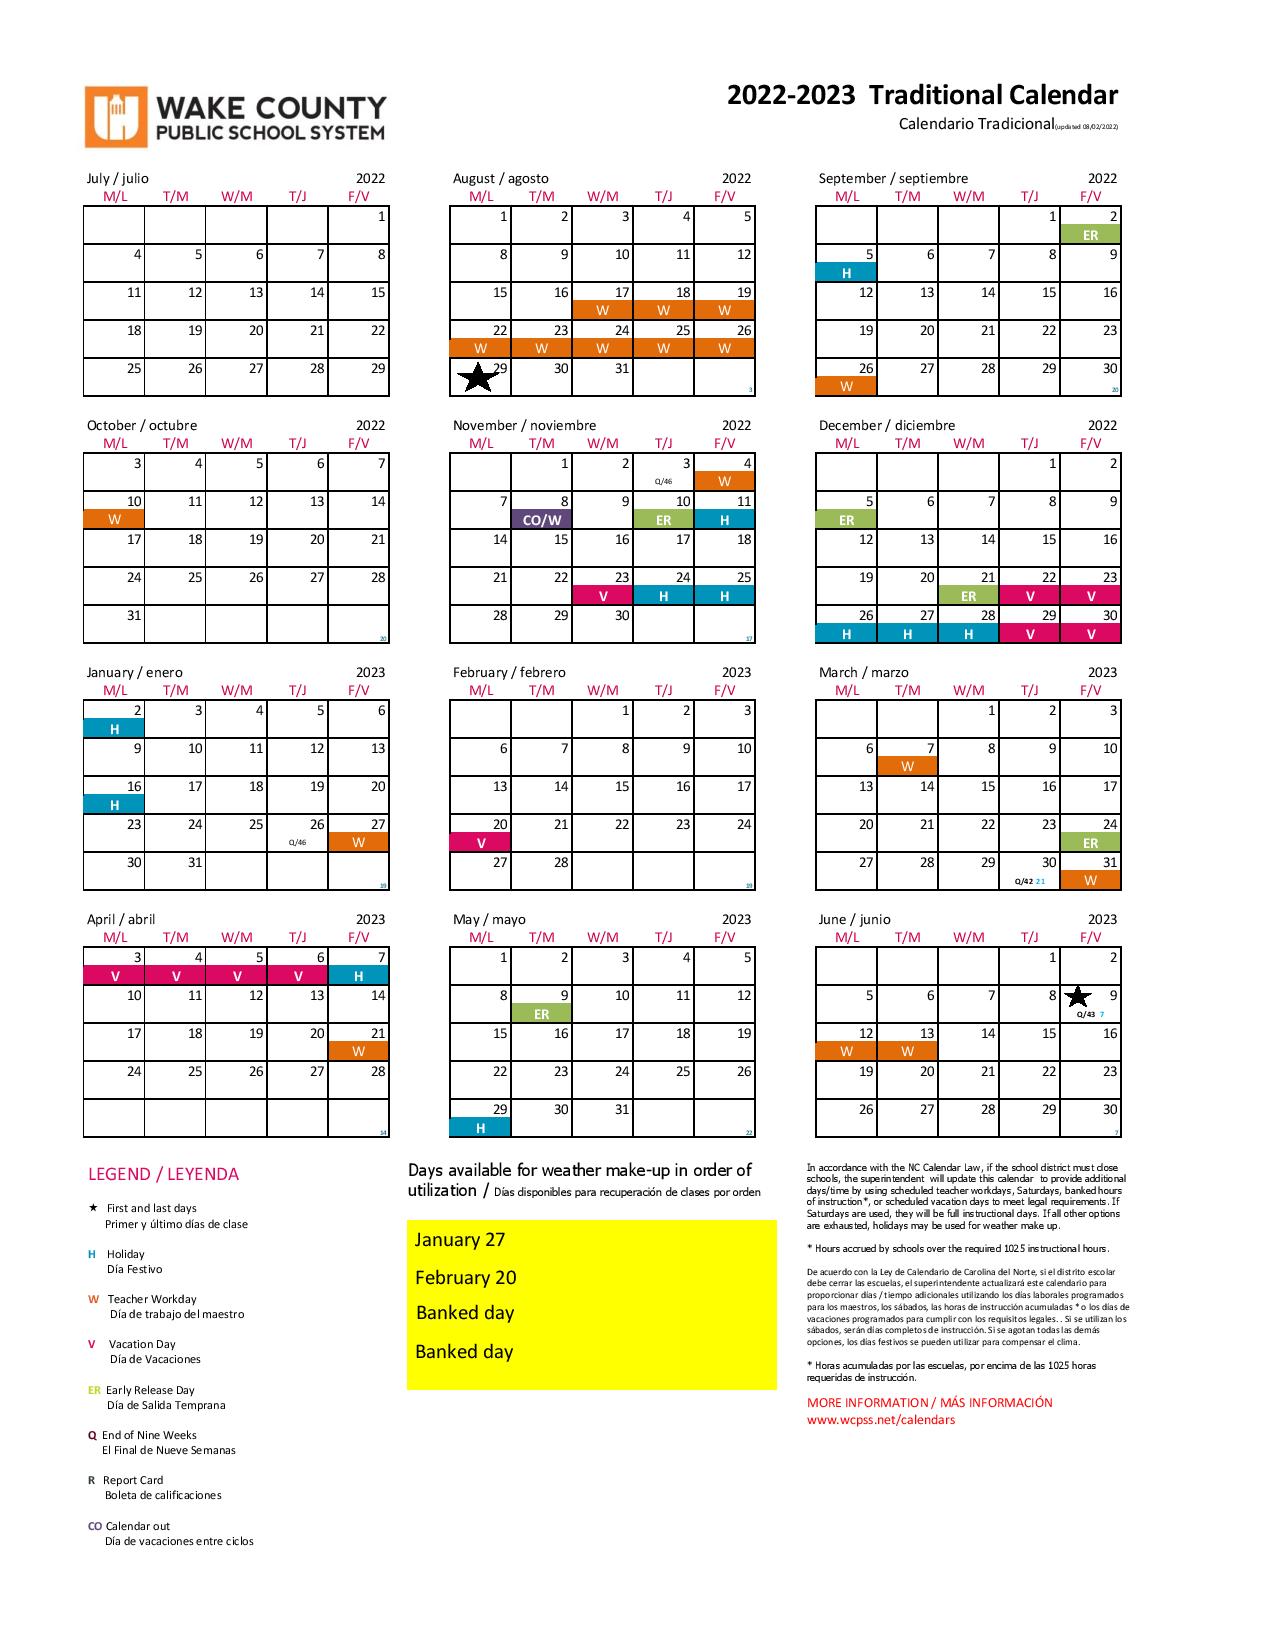 Wake County School Calendar 2023 23 – Get Calendar 2023 Update